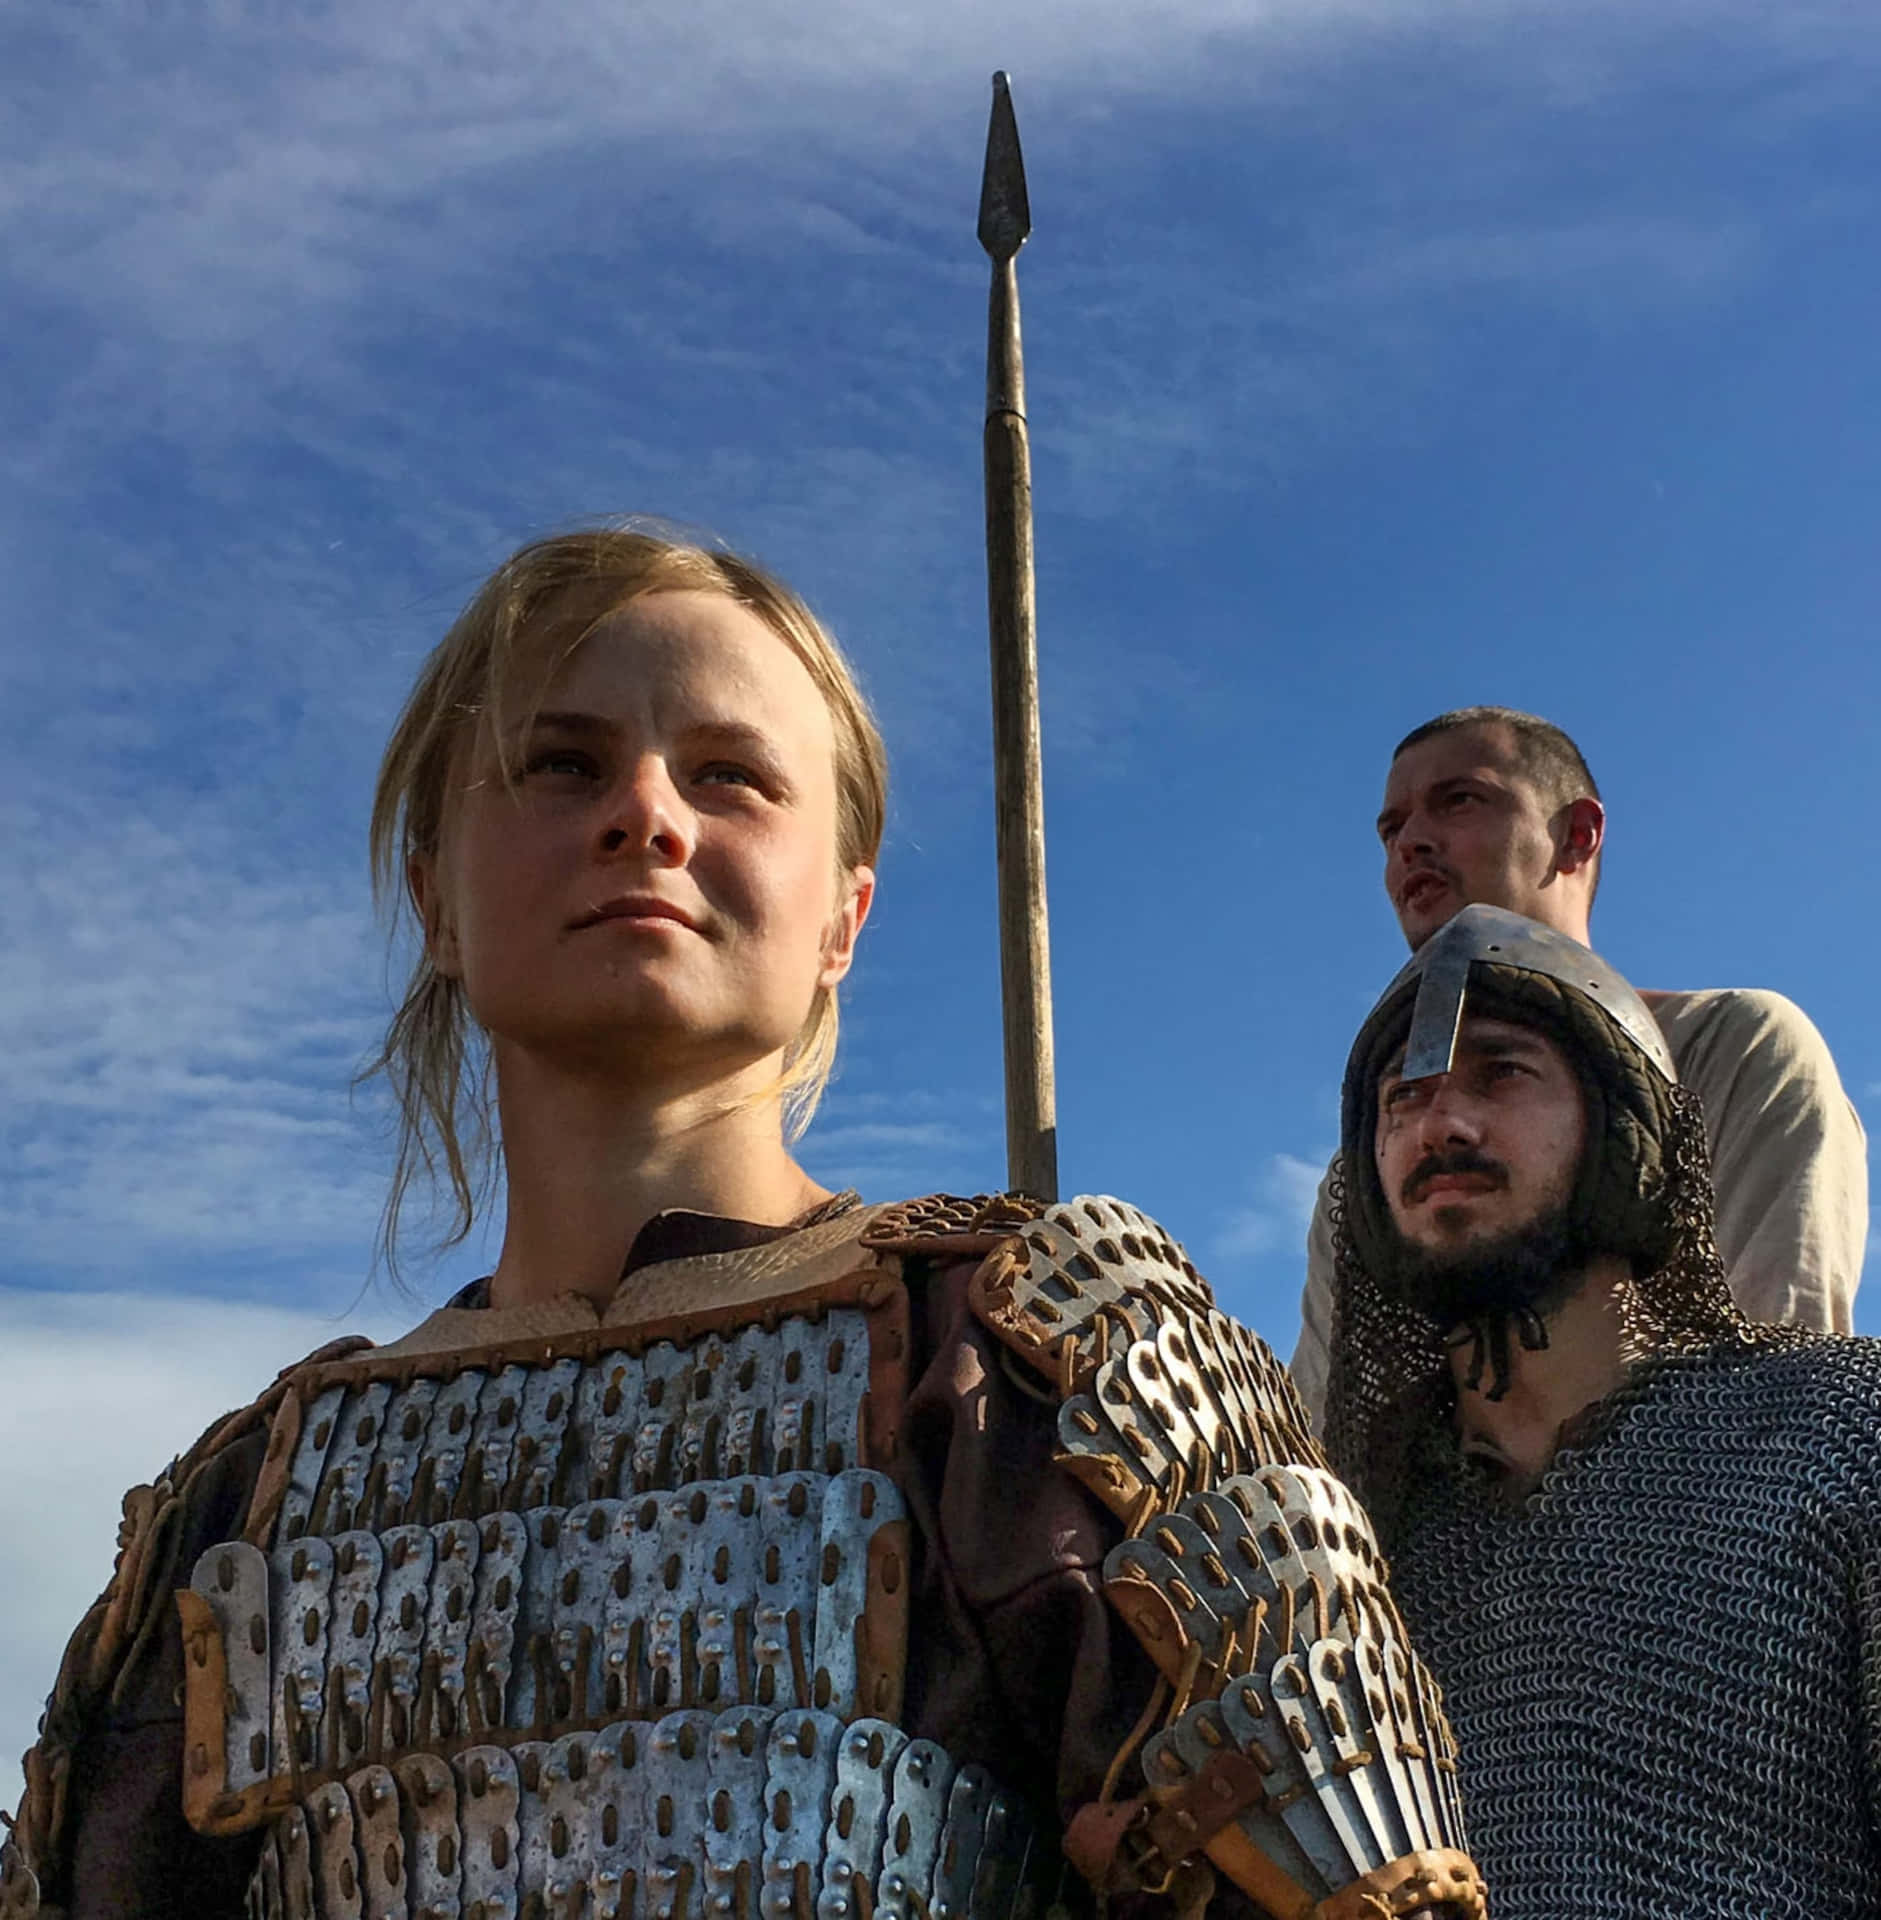 Valkyries - Female Viking Warriors of Strength and Bravery